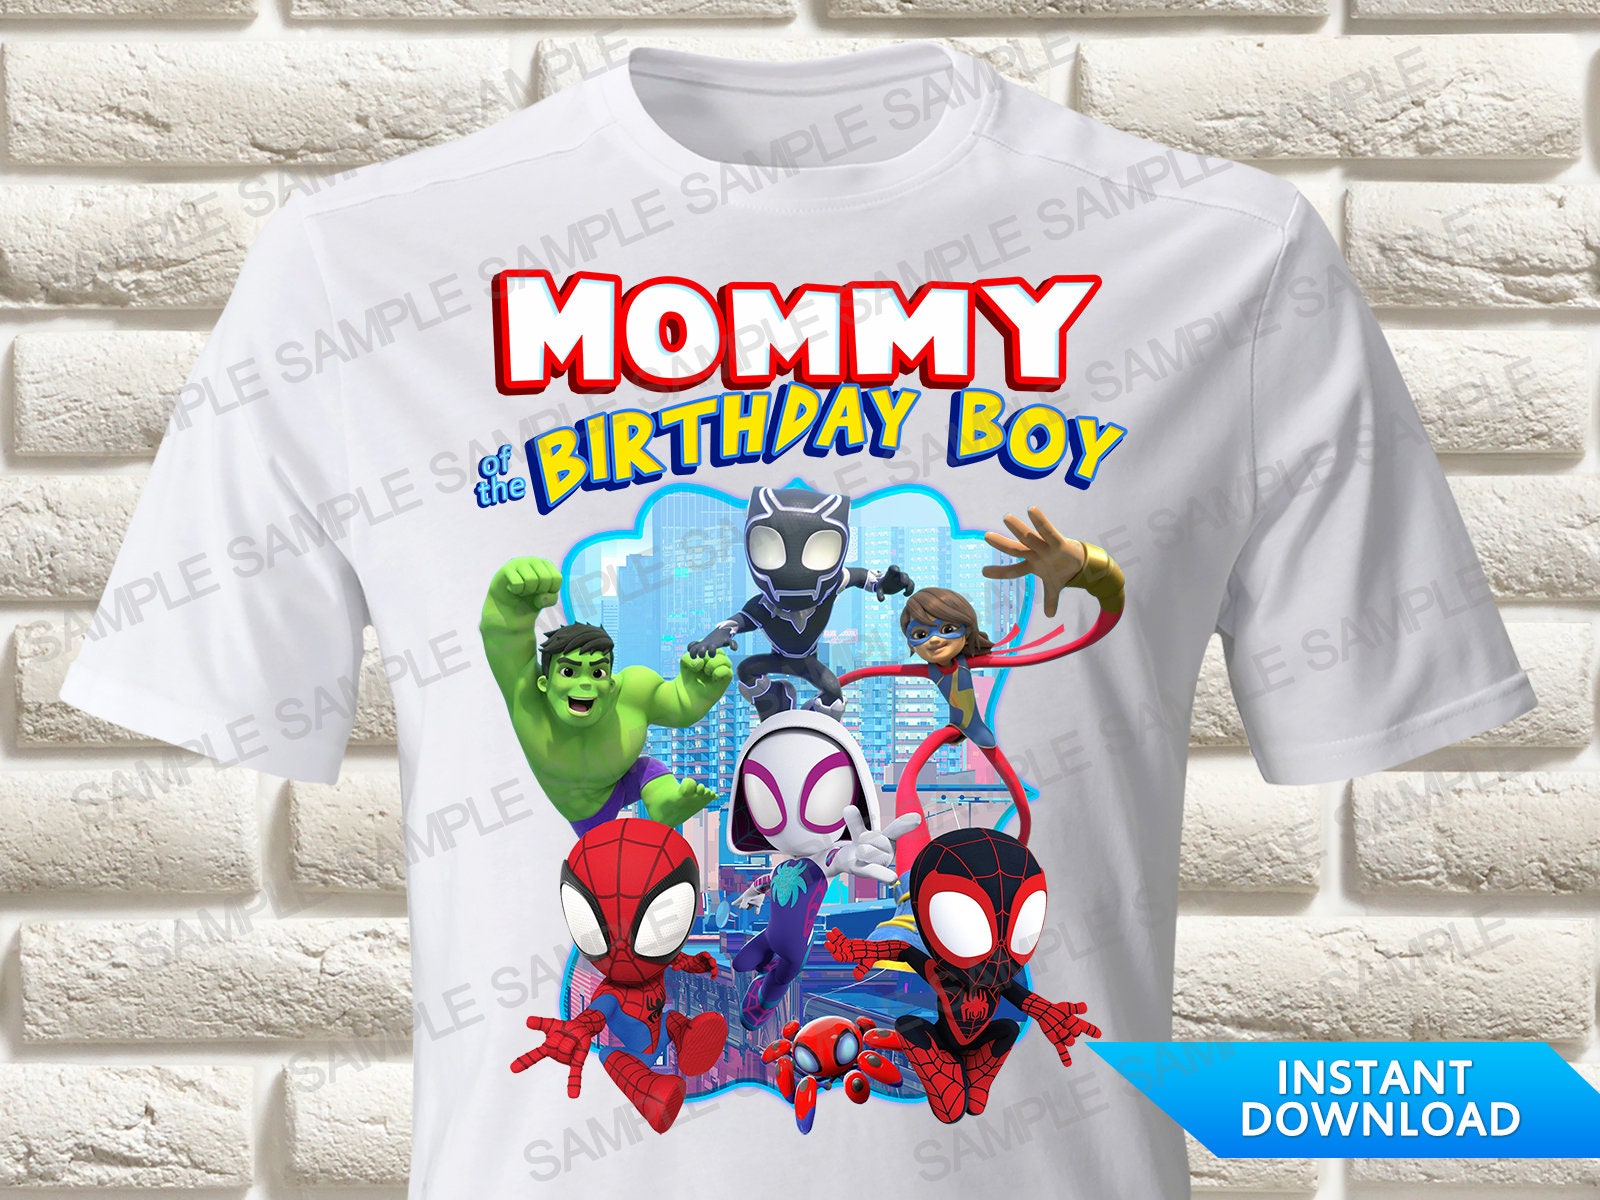 T-shirt SPIDERMAN Enfant - Impression grand format